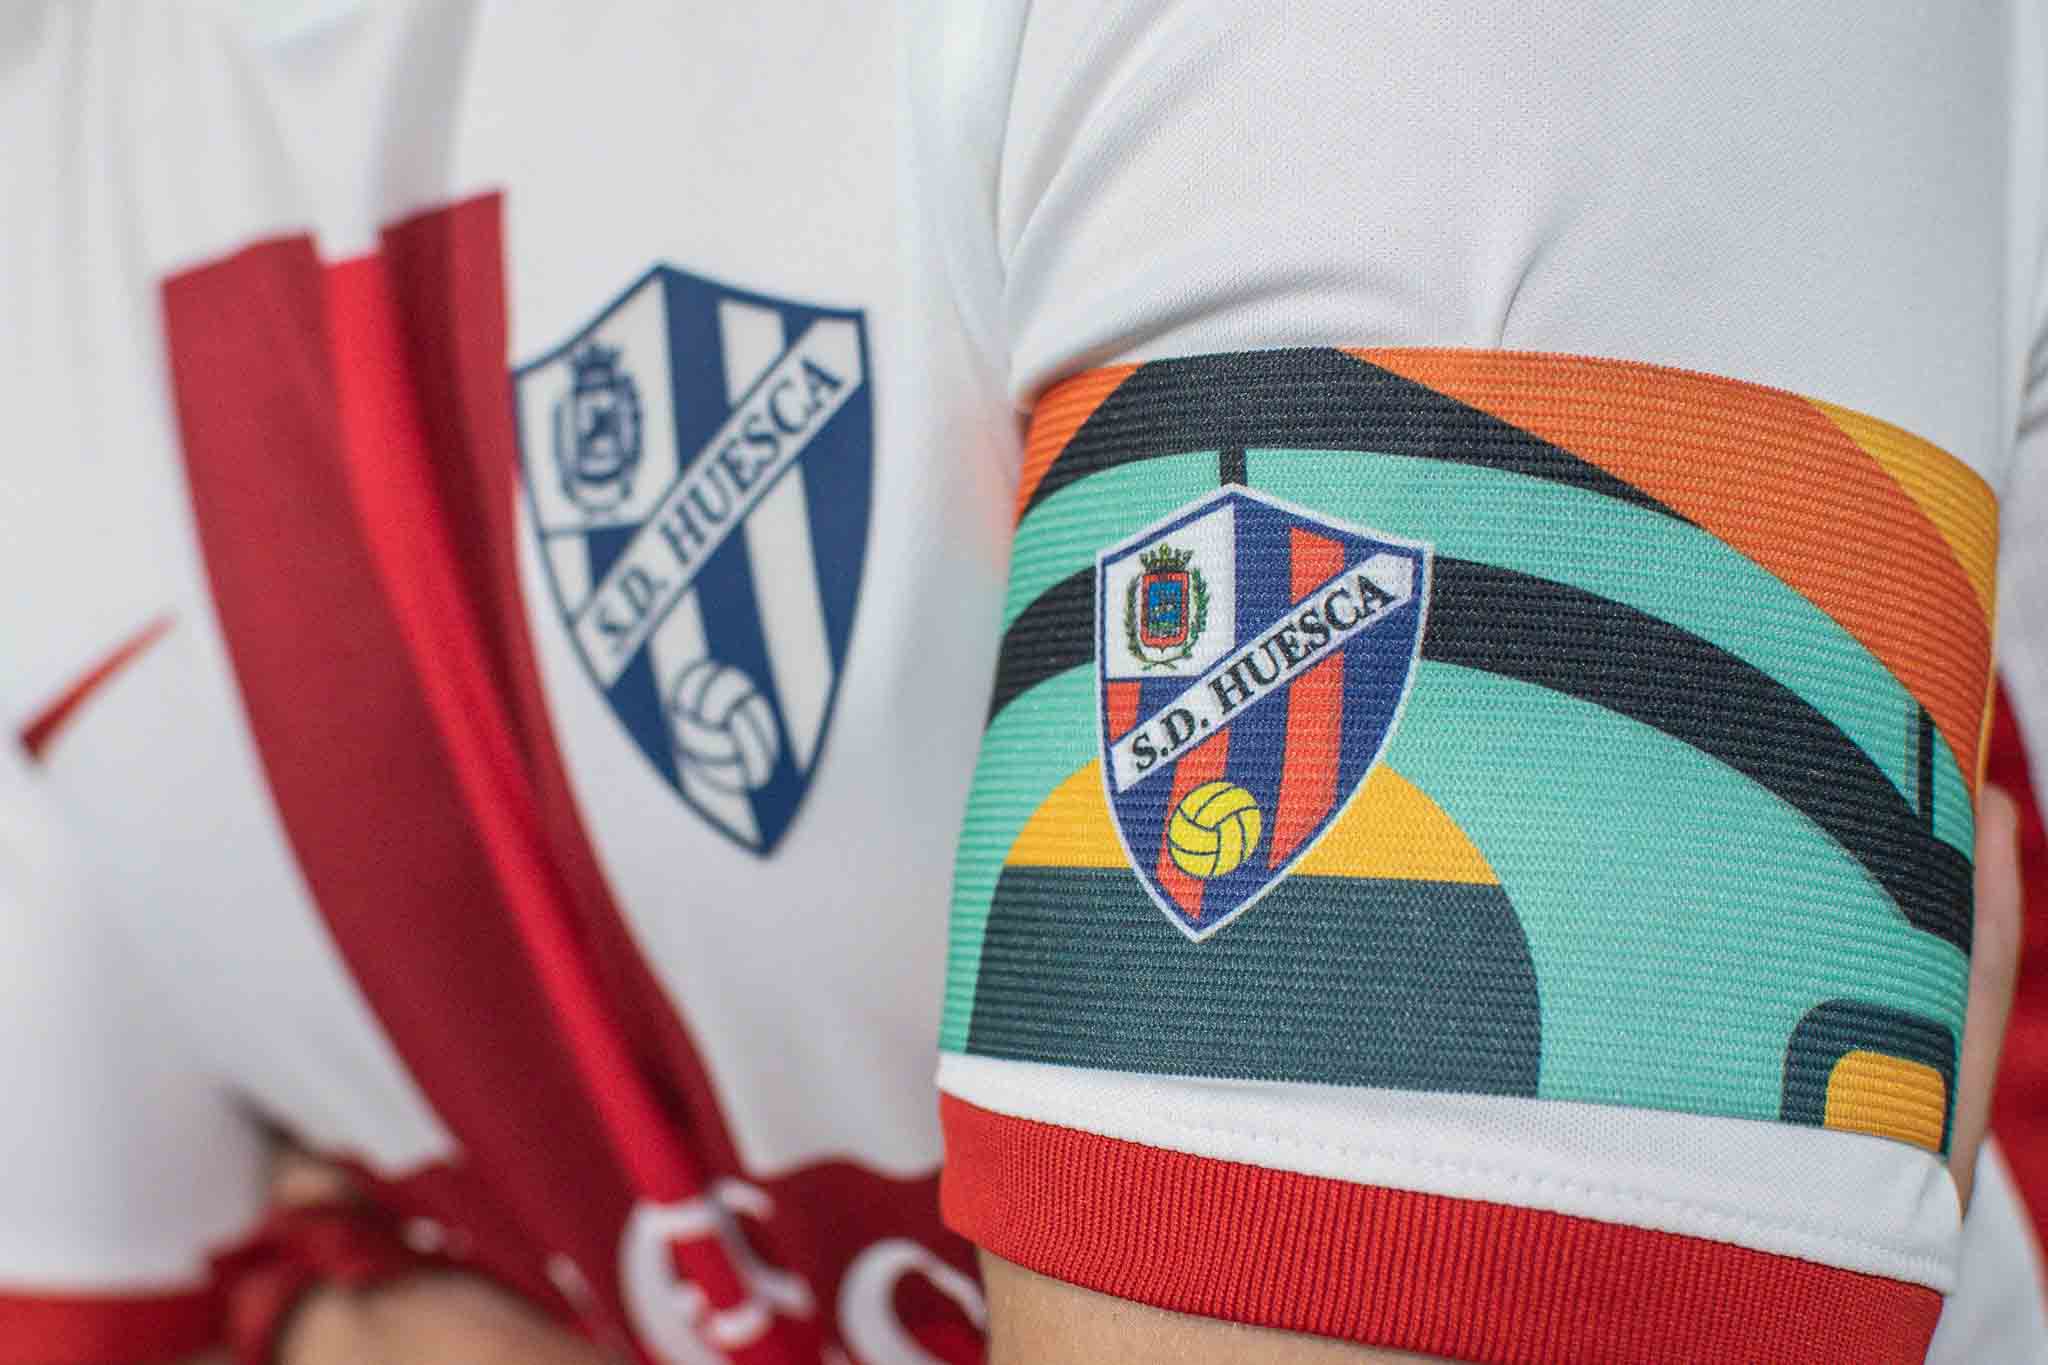 Armband for CD Mirandés vs SD Huesca